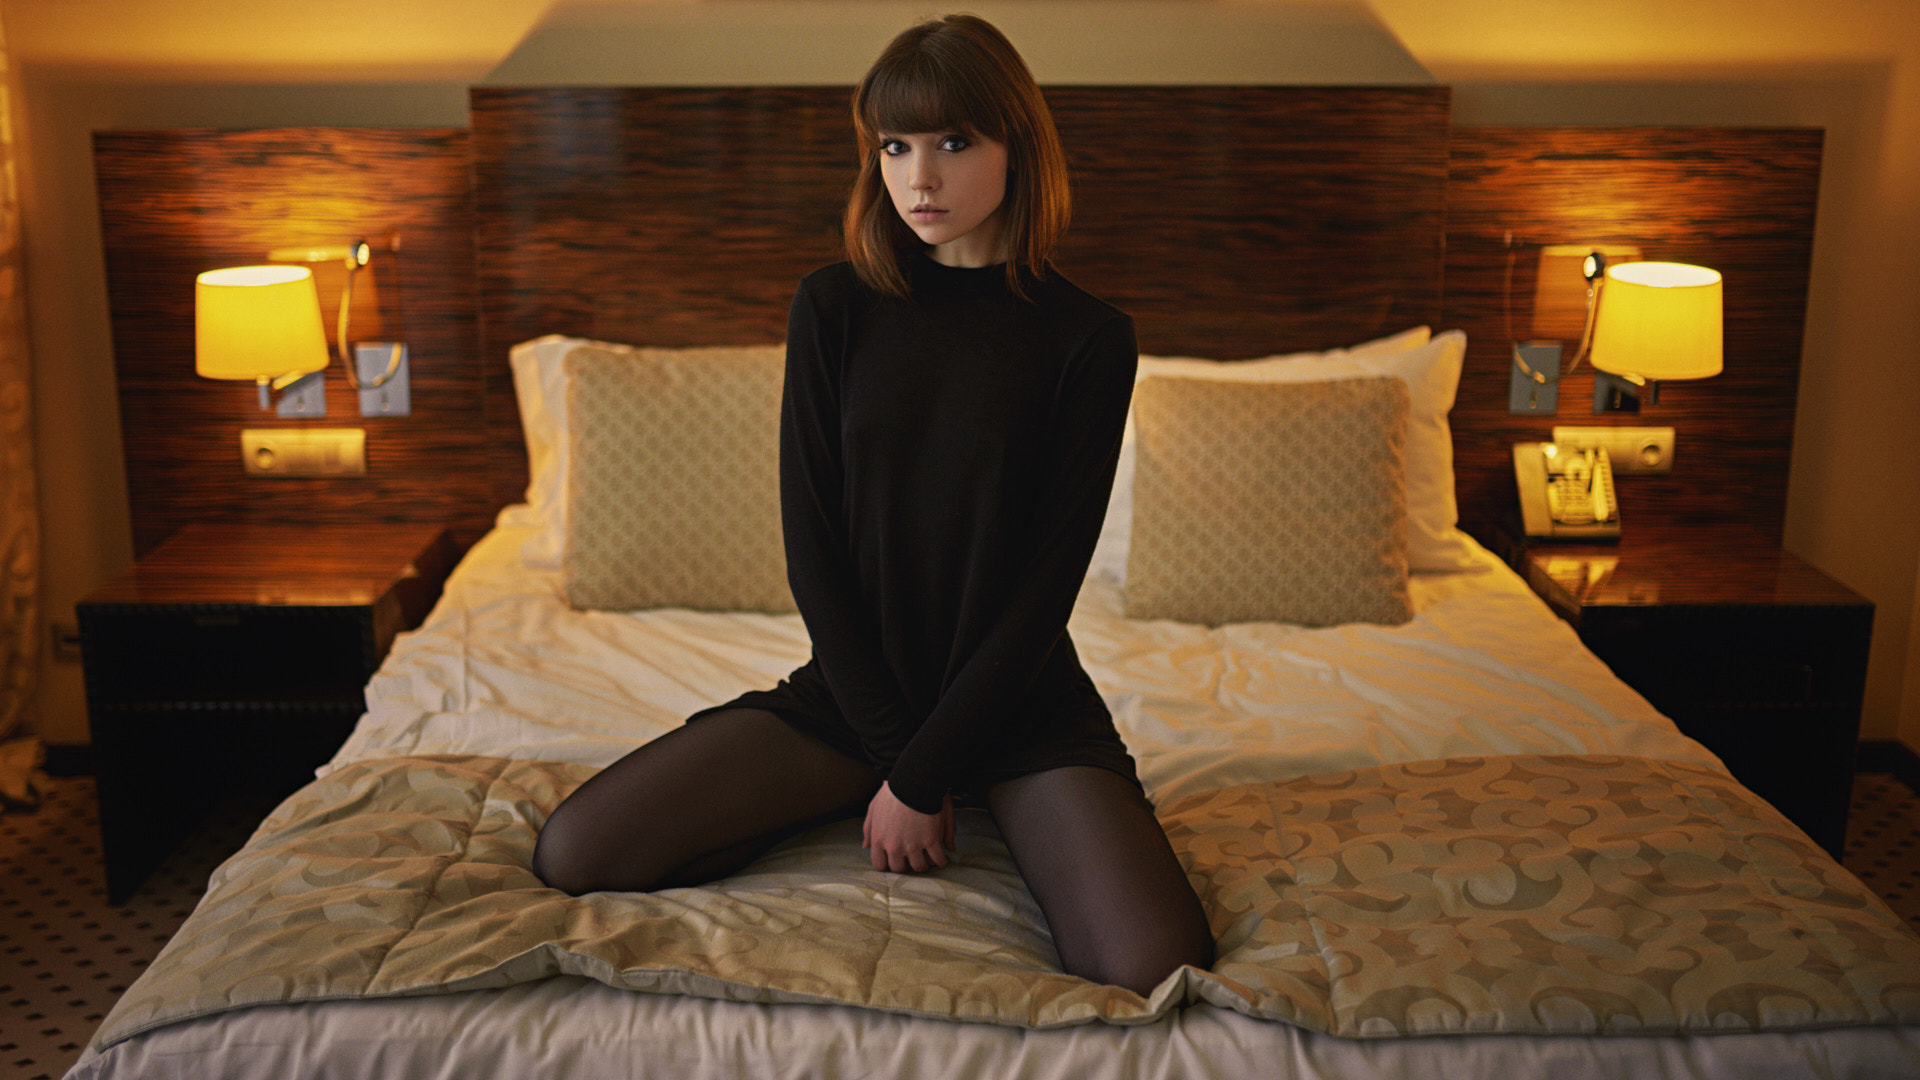 Sergey Zhirnov Women Olya Pushkina Brunette Black Clothing Bed Warm Light 1920x1080